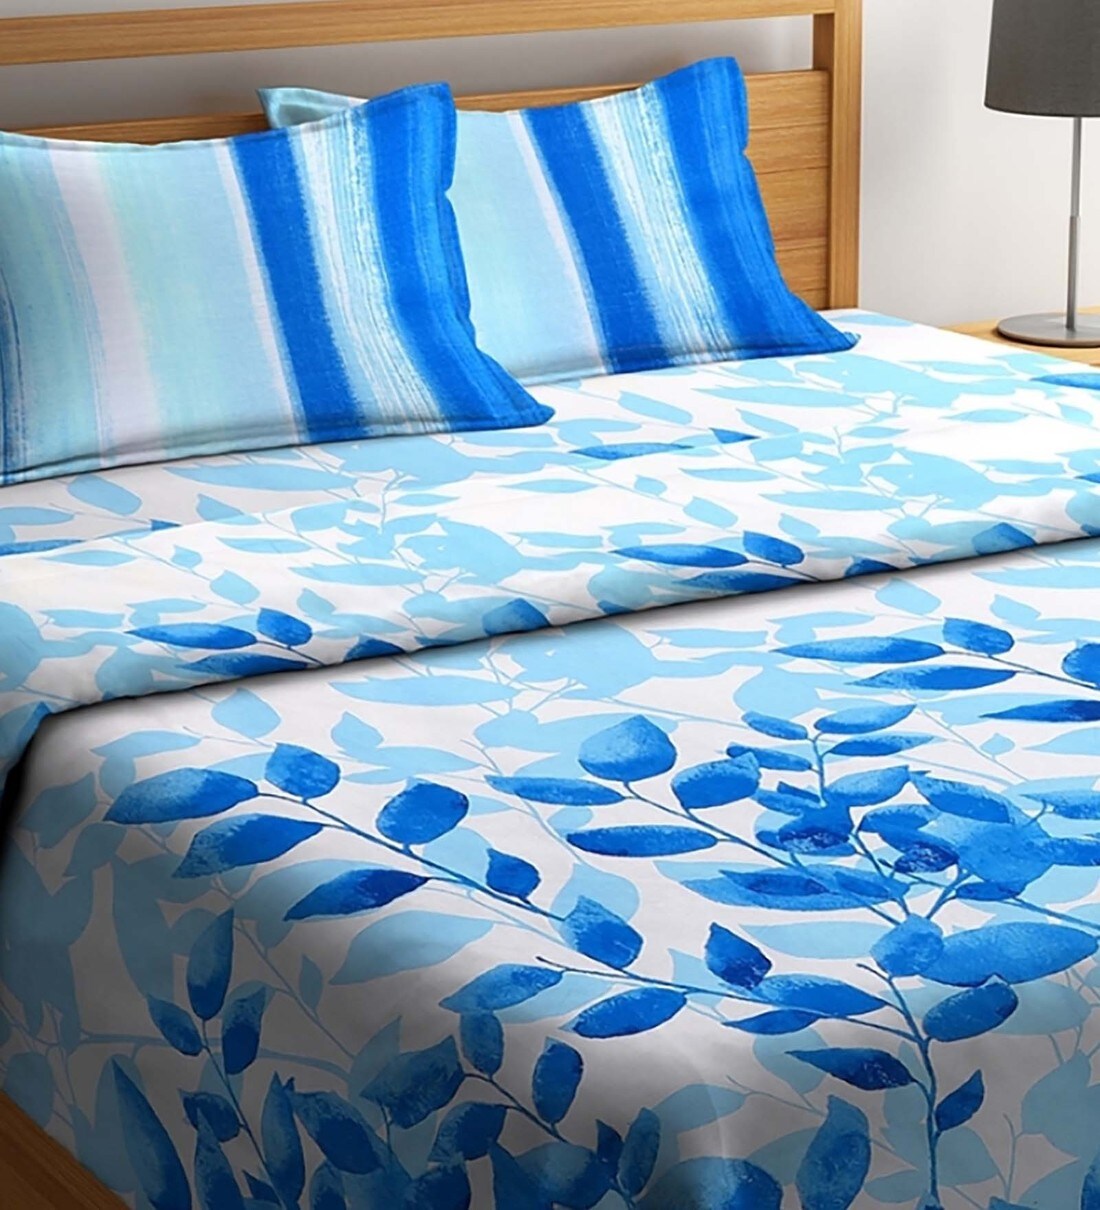 bedsheet with comforter